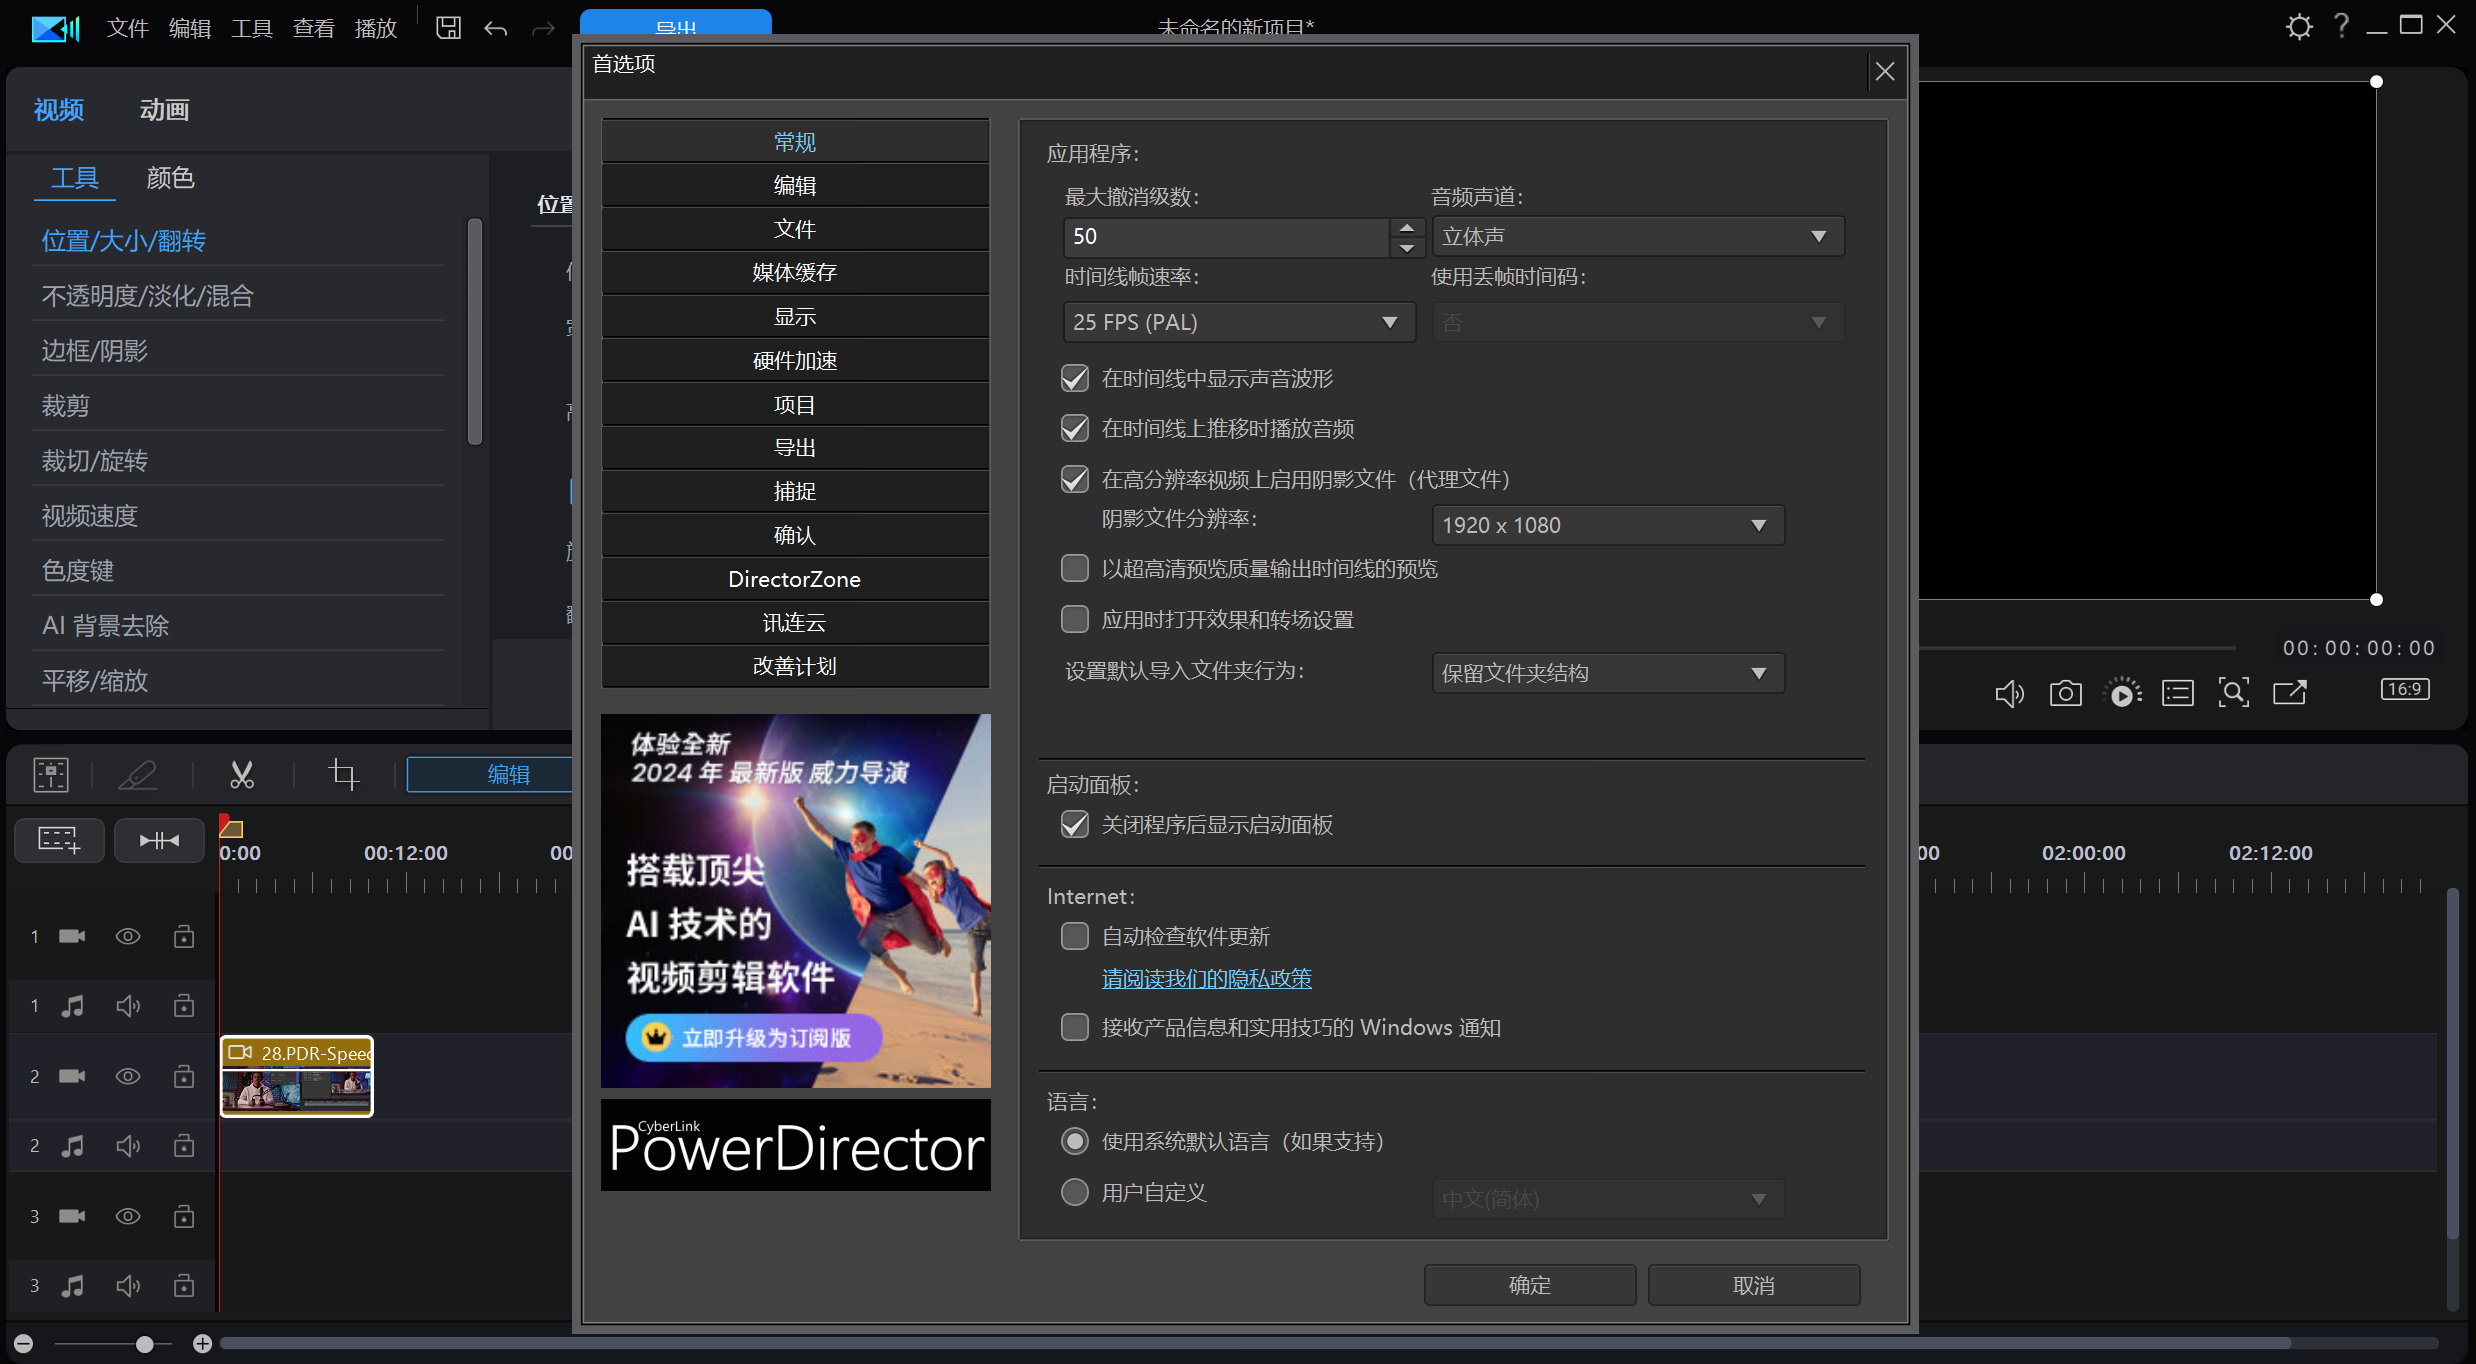 CyberLink PowerDirector Ultimate 2024 v22.2.2712.0 x64 Multilingual 中文注册版 -威力导演2024